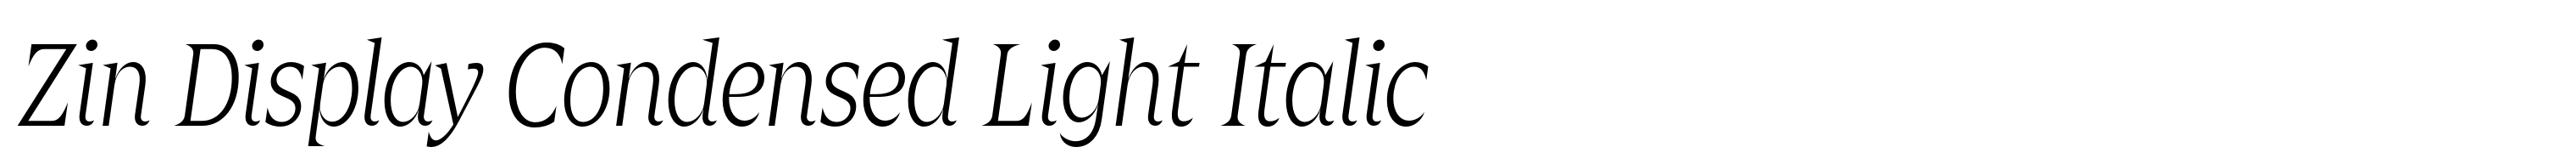 Zin Display Condensed Light Italic